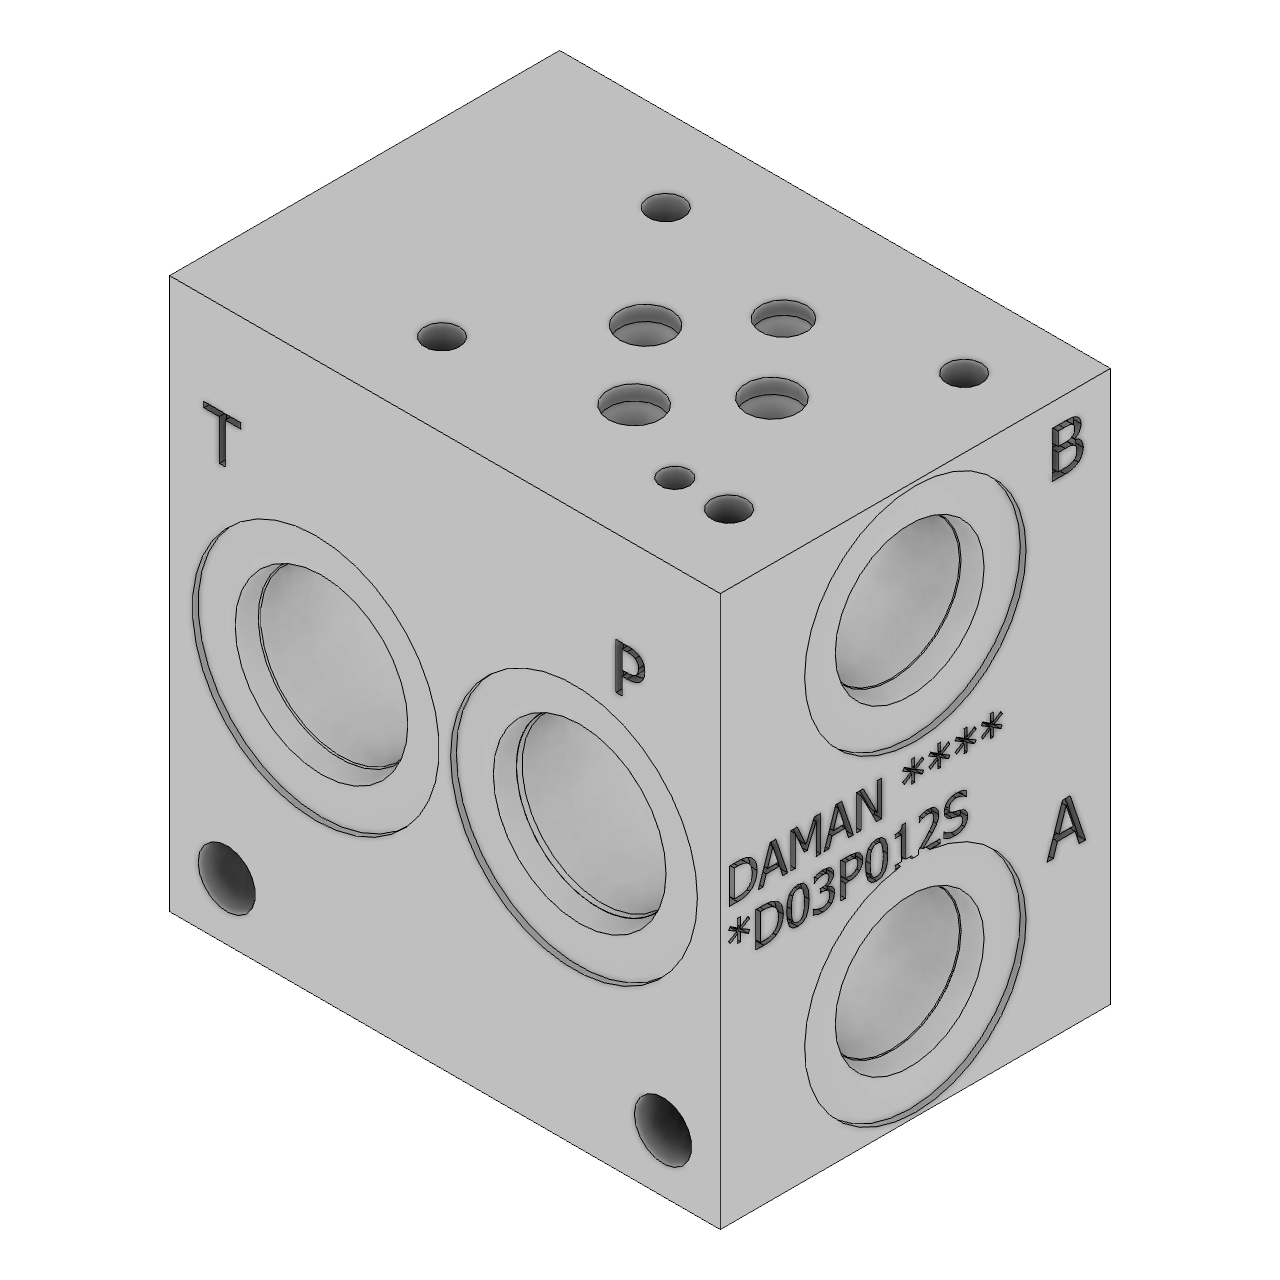 SD03P012S - Standard Manifolds